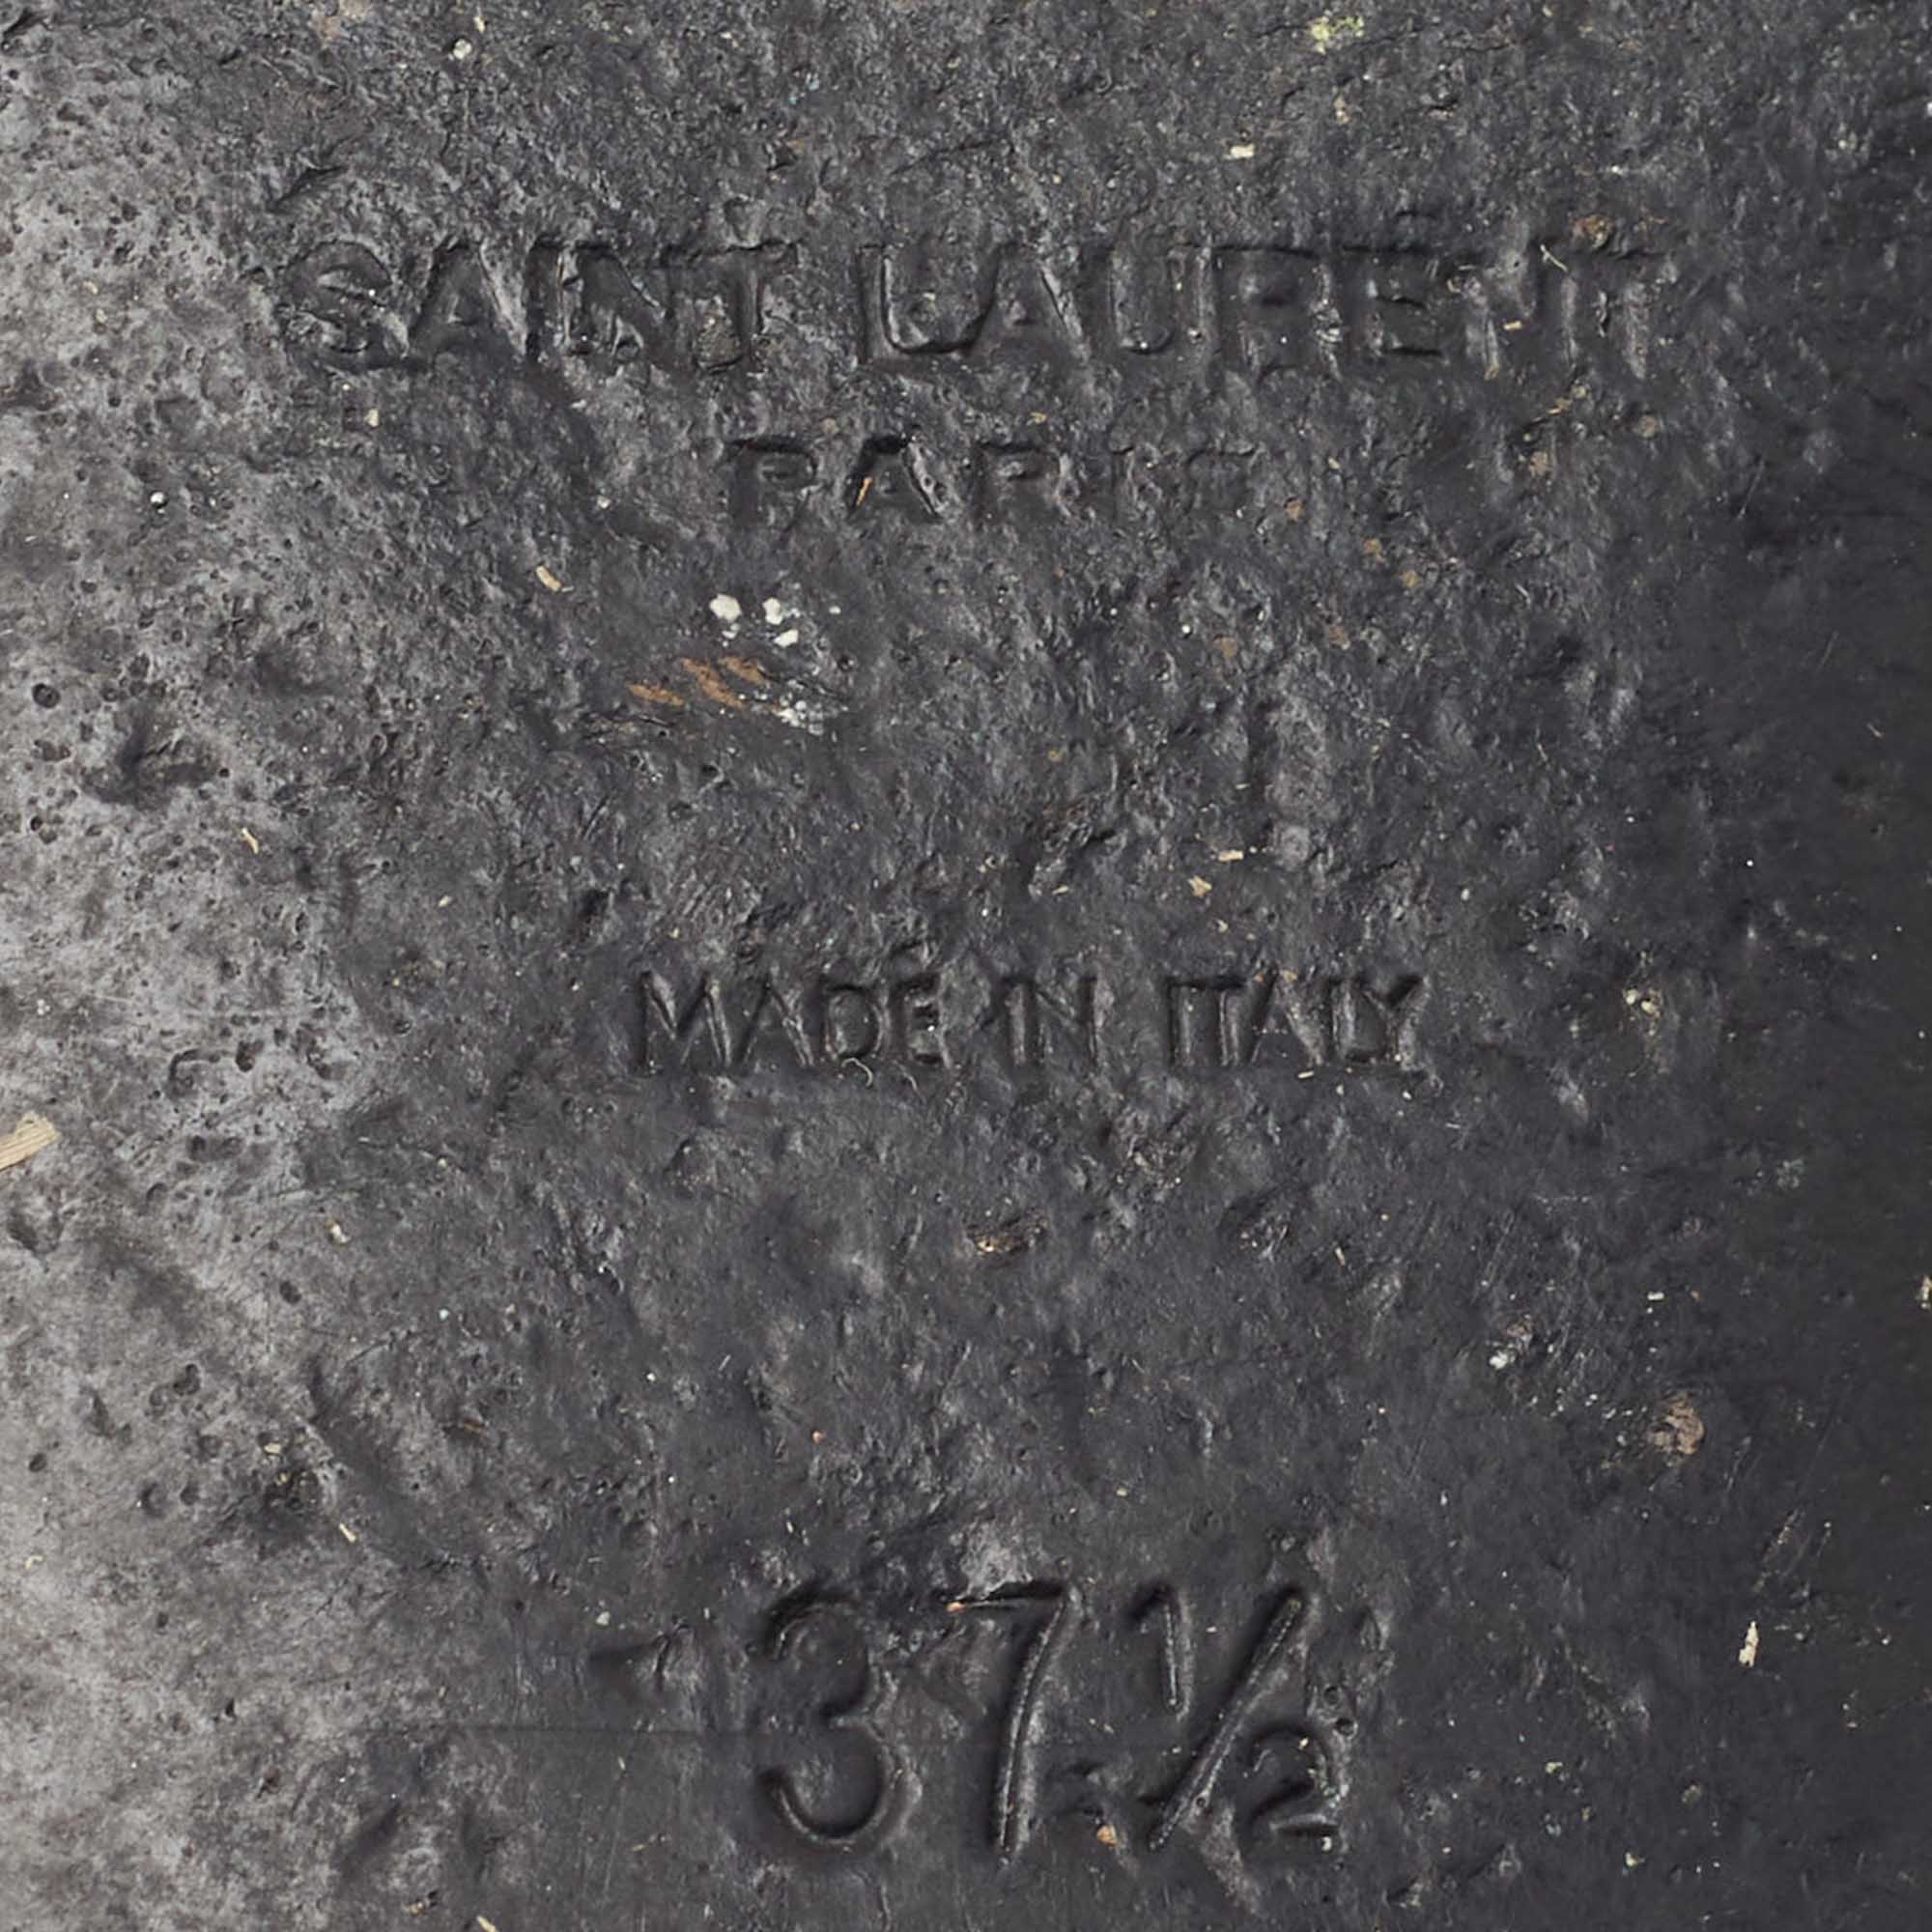 Saint Laurent Dark Green Croc Embossed Leather Tribute  Flat Slides Size 37.5